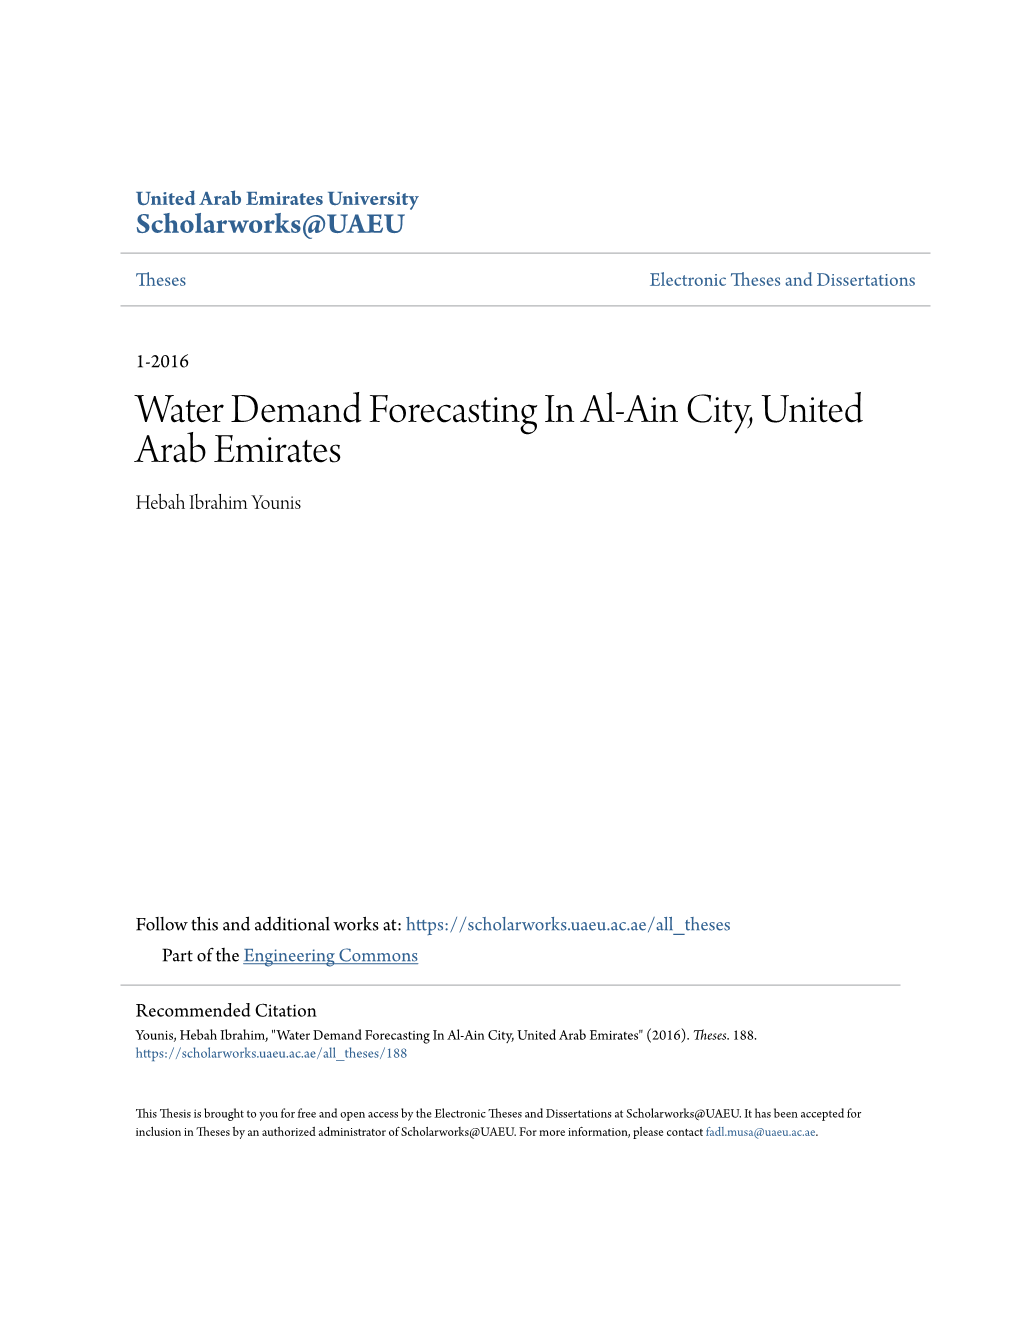 Water Demand Forecasting in Al-Ain City, United Arab Emirates Hebah Ibrahim Younis